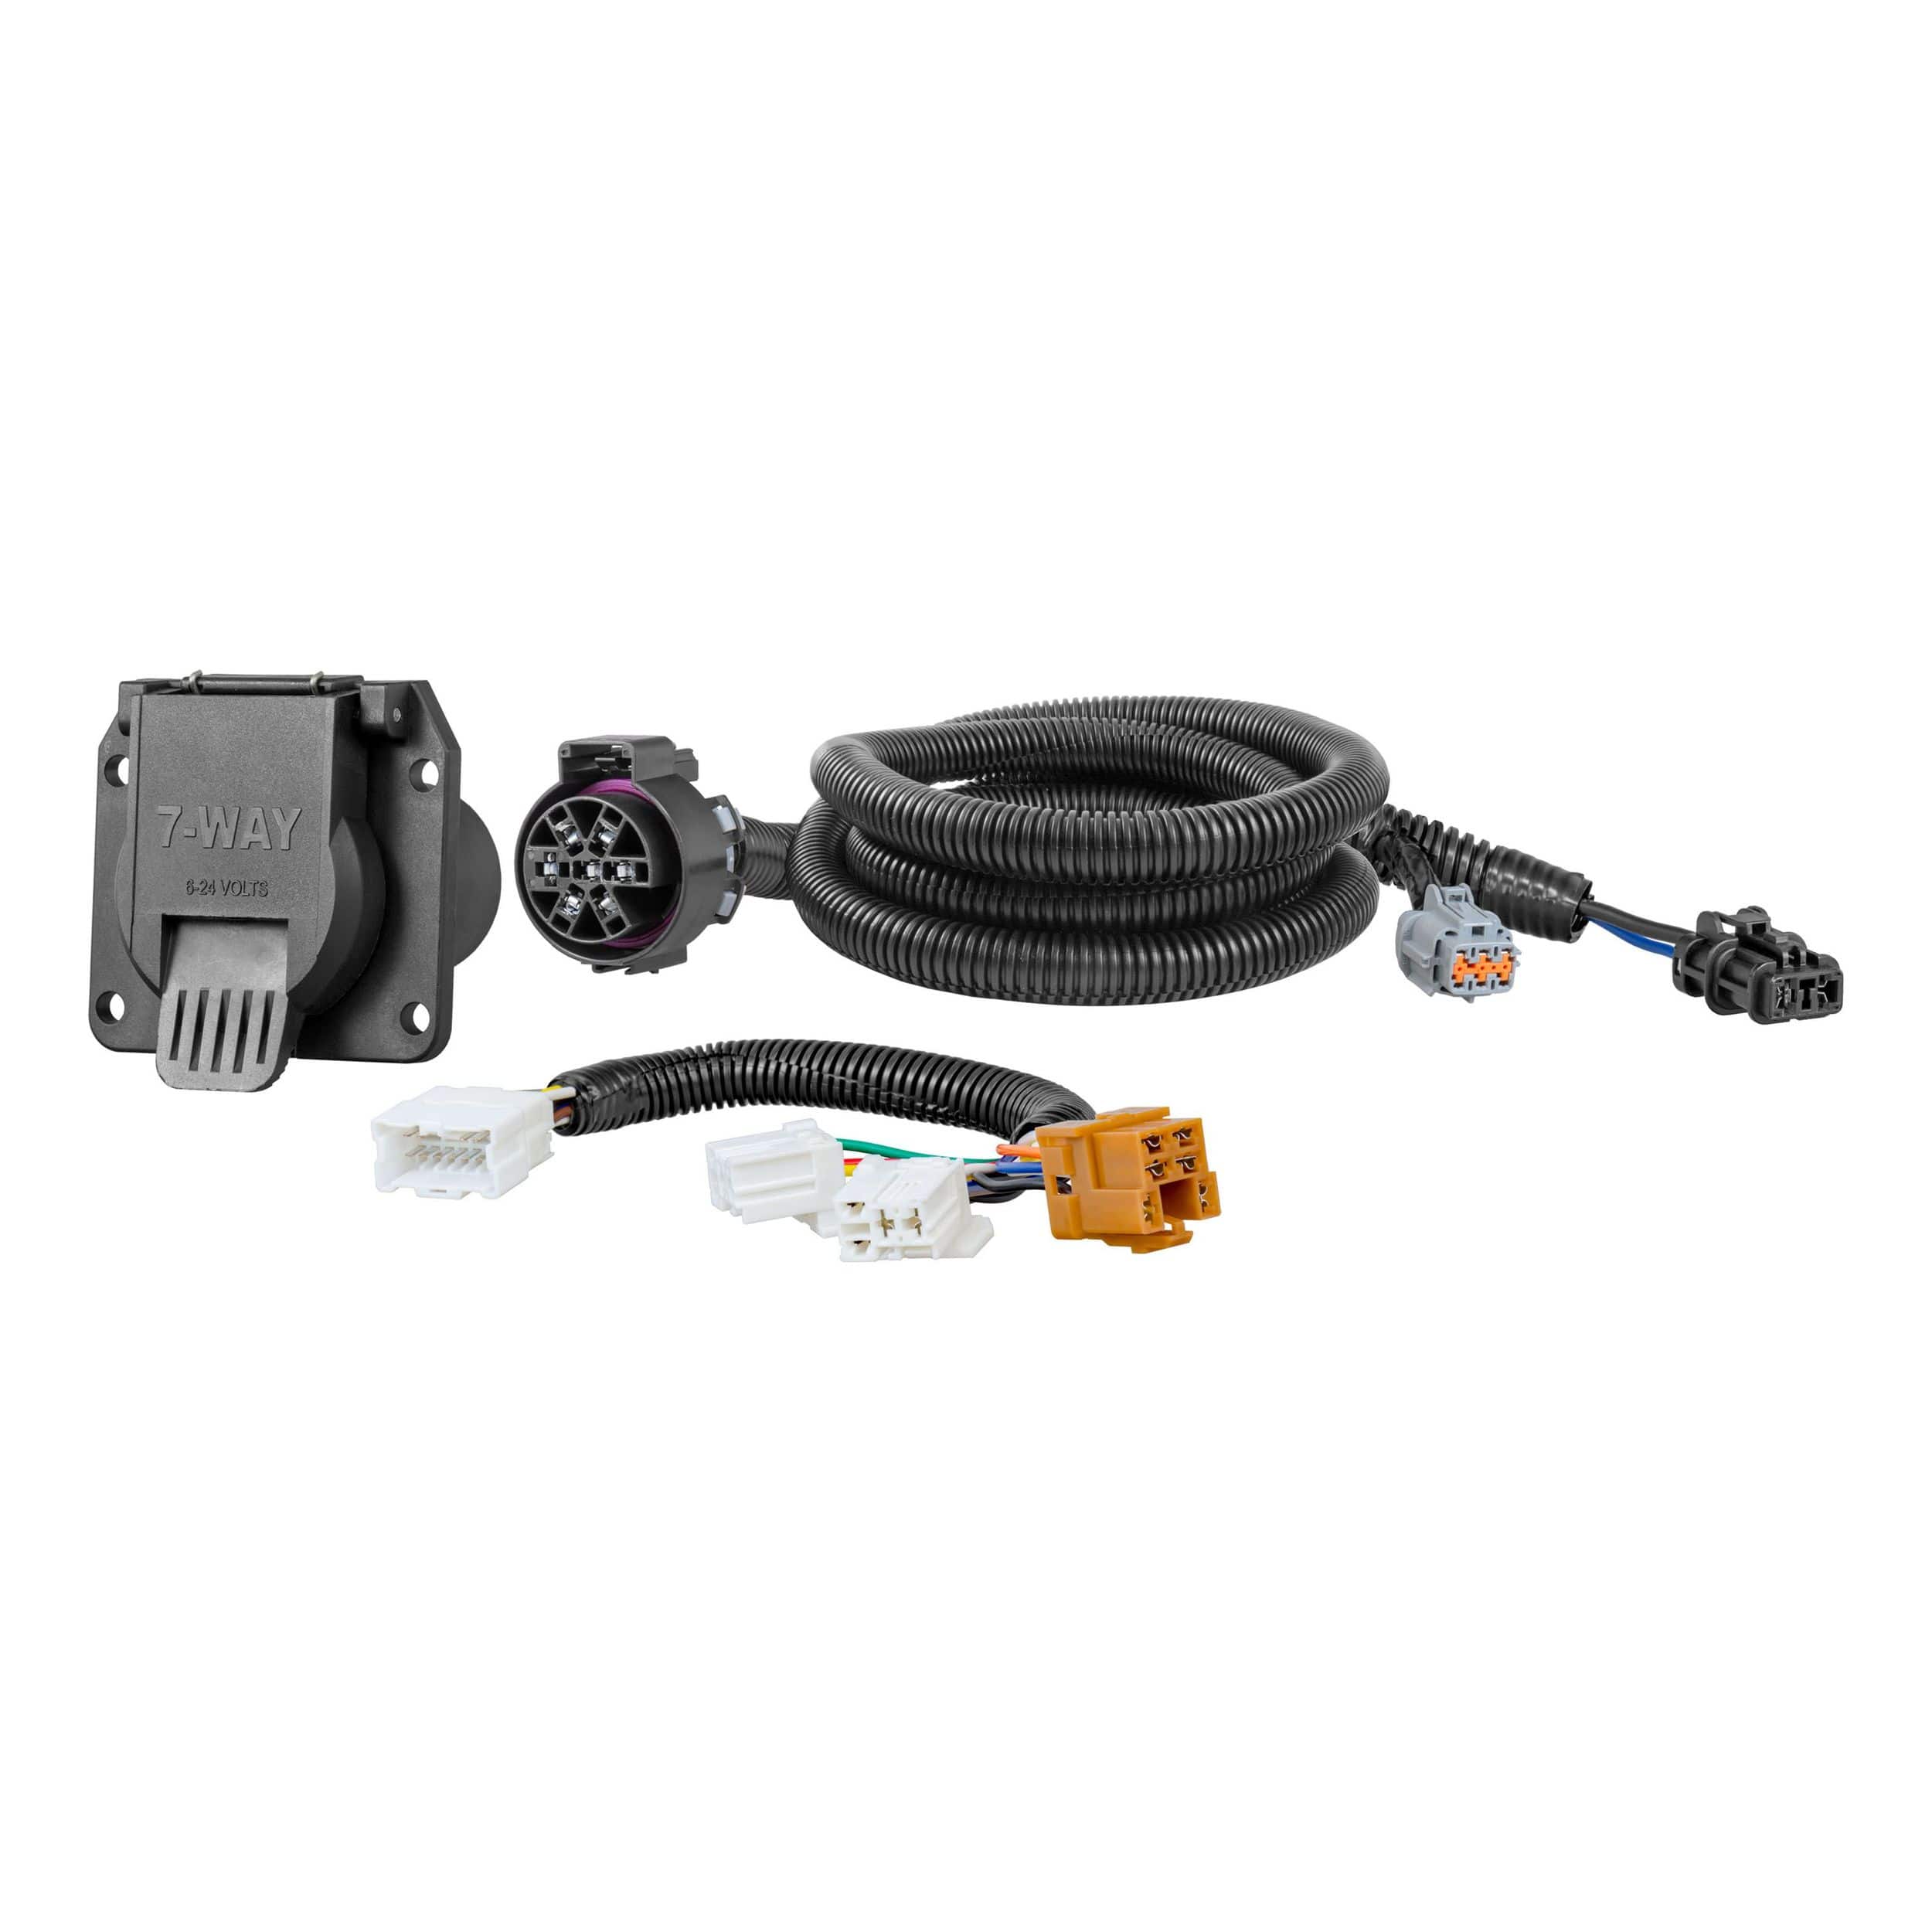 CURT 56074 4-Way Flat Custom Vehicle Plug & Play Wiring Harness